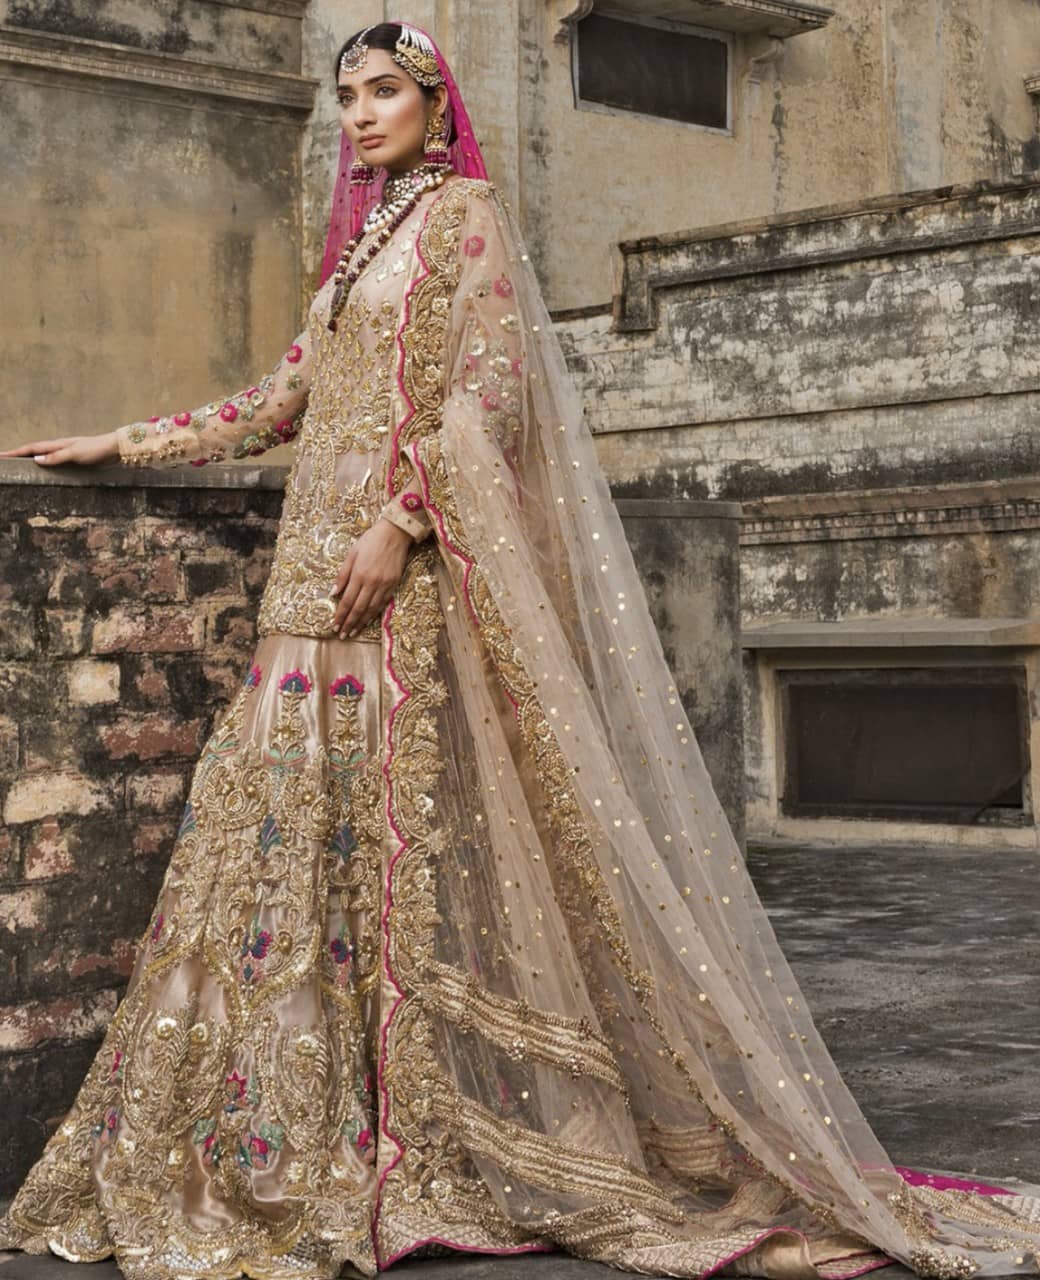 Muslim Wedding Dress - Dress with Dupatta